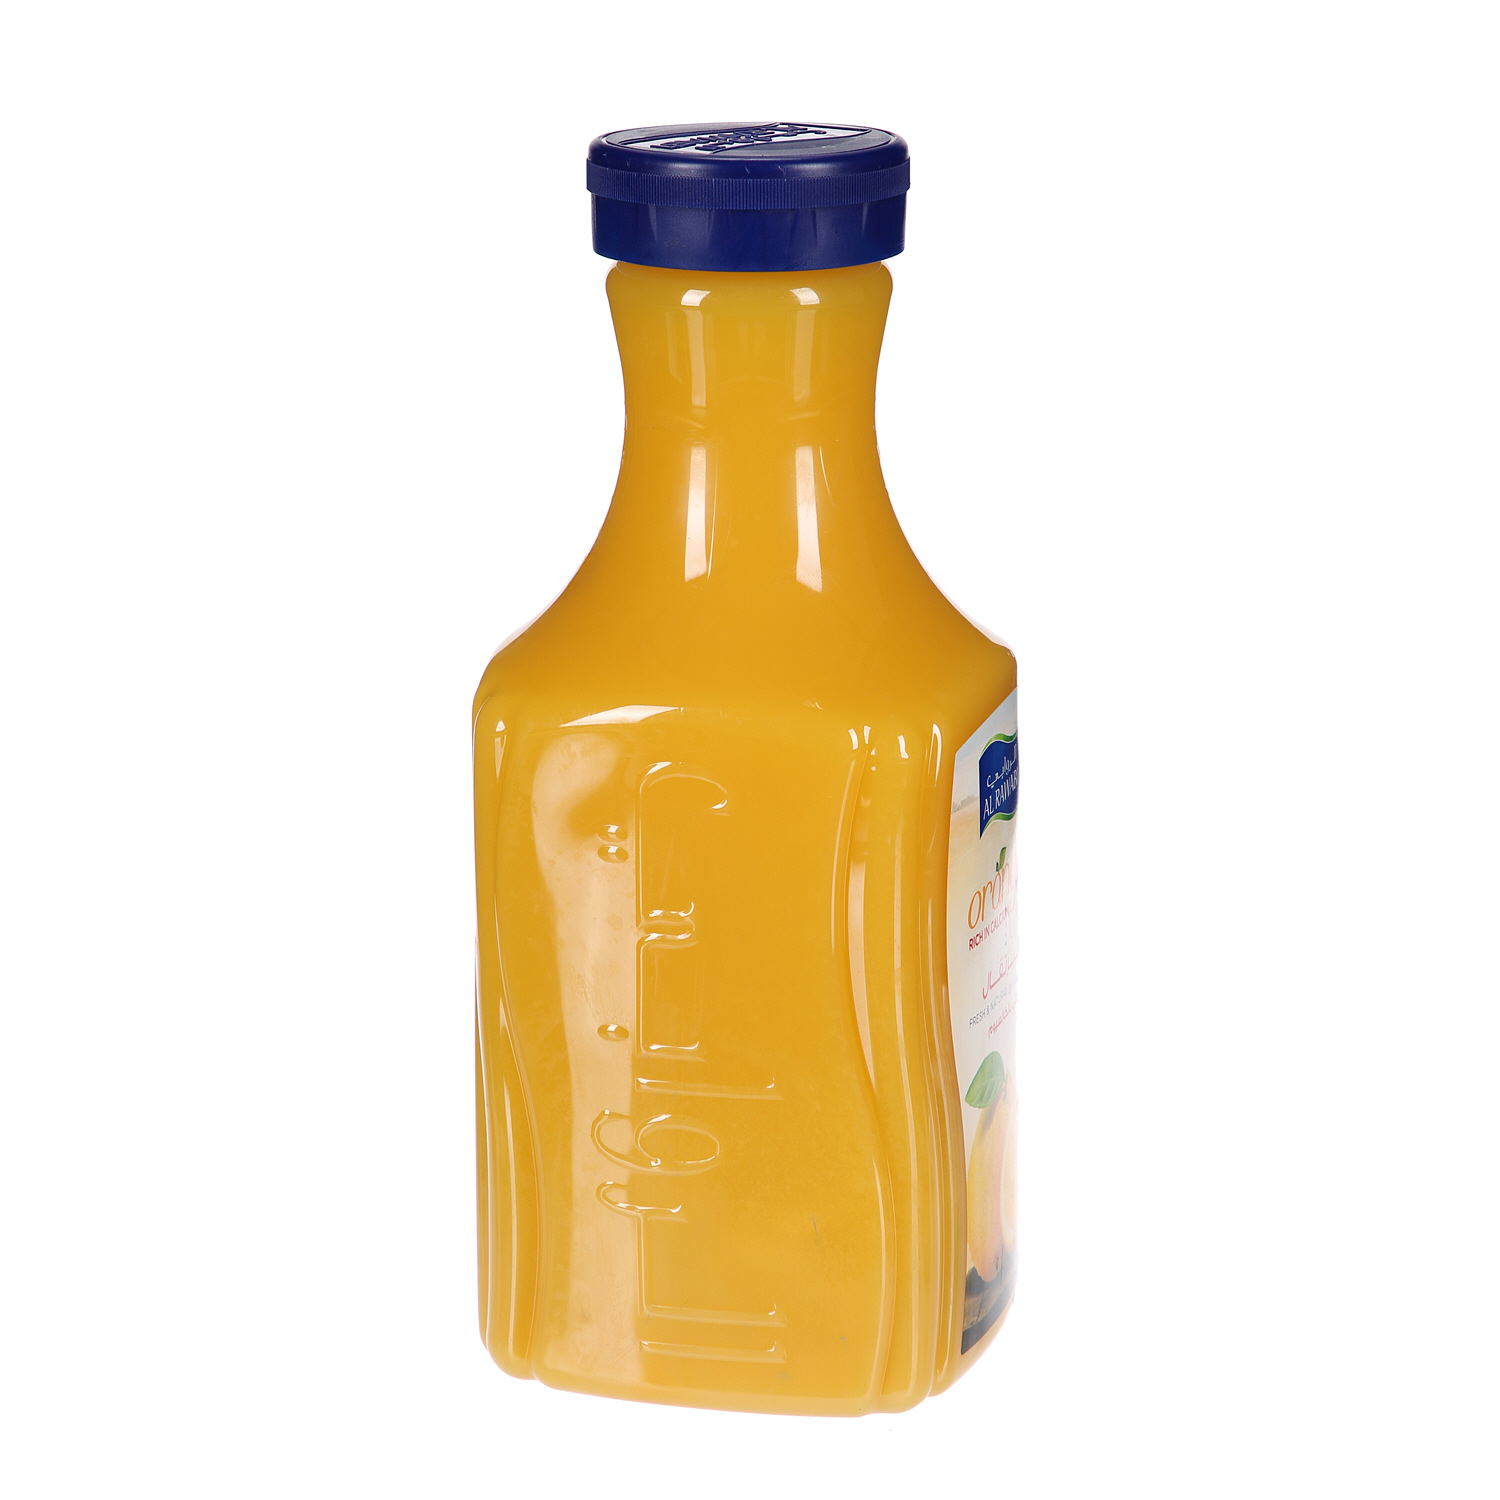 Al Rawabi Orange Juice Rich In Cal 1.75 Ltr